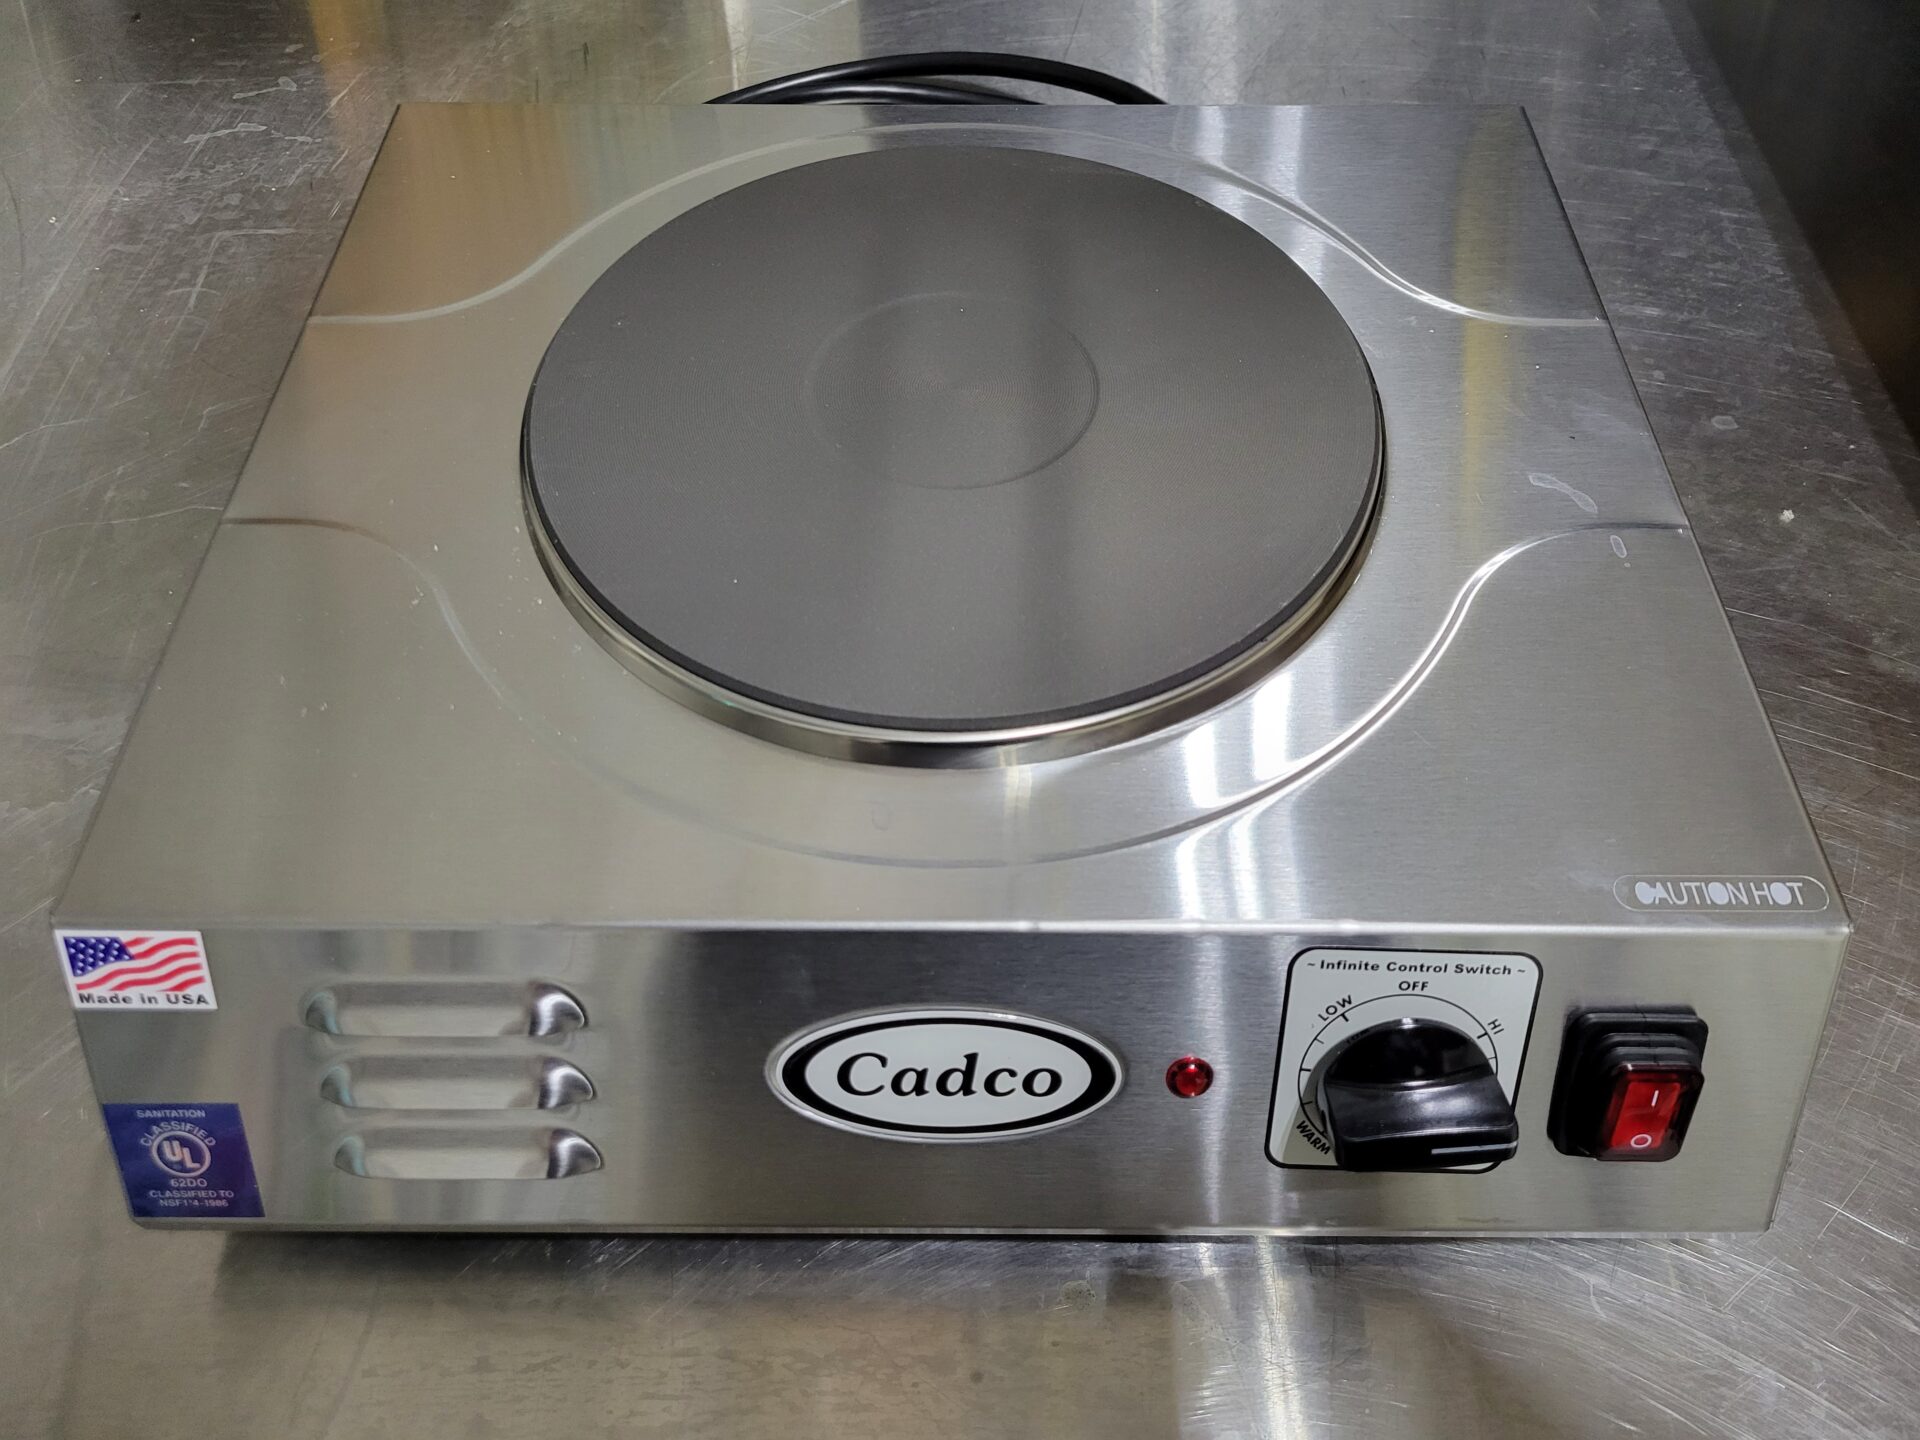 Cadco 220v 2000w hot plate